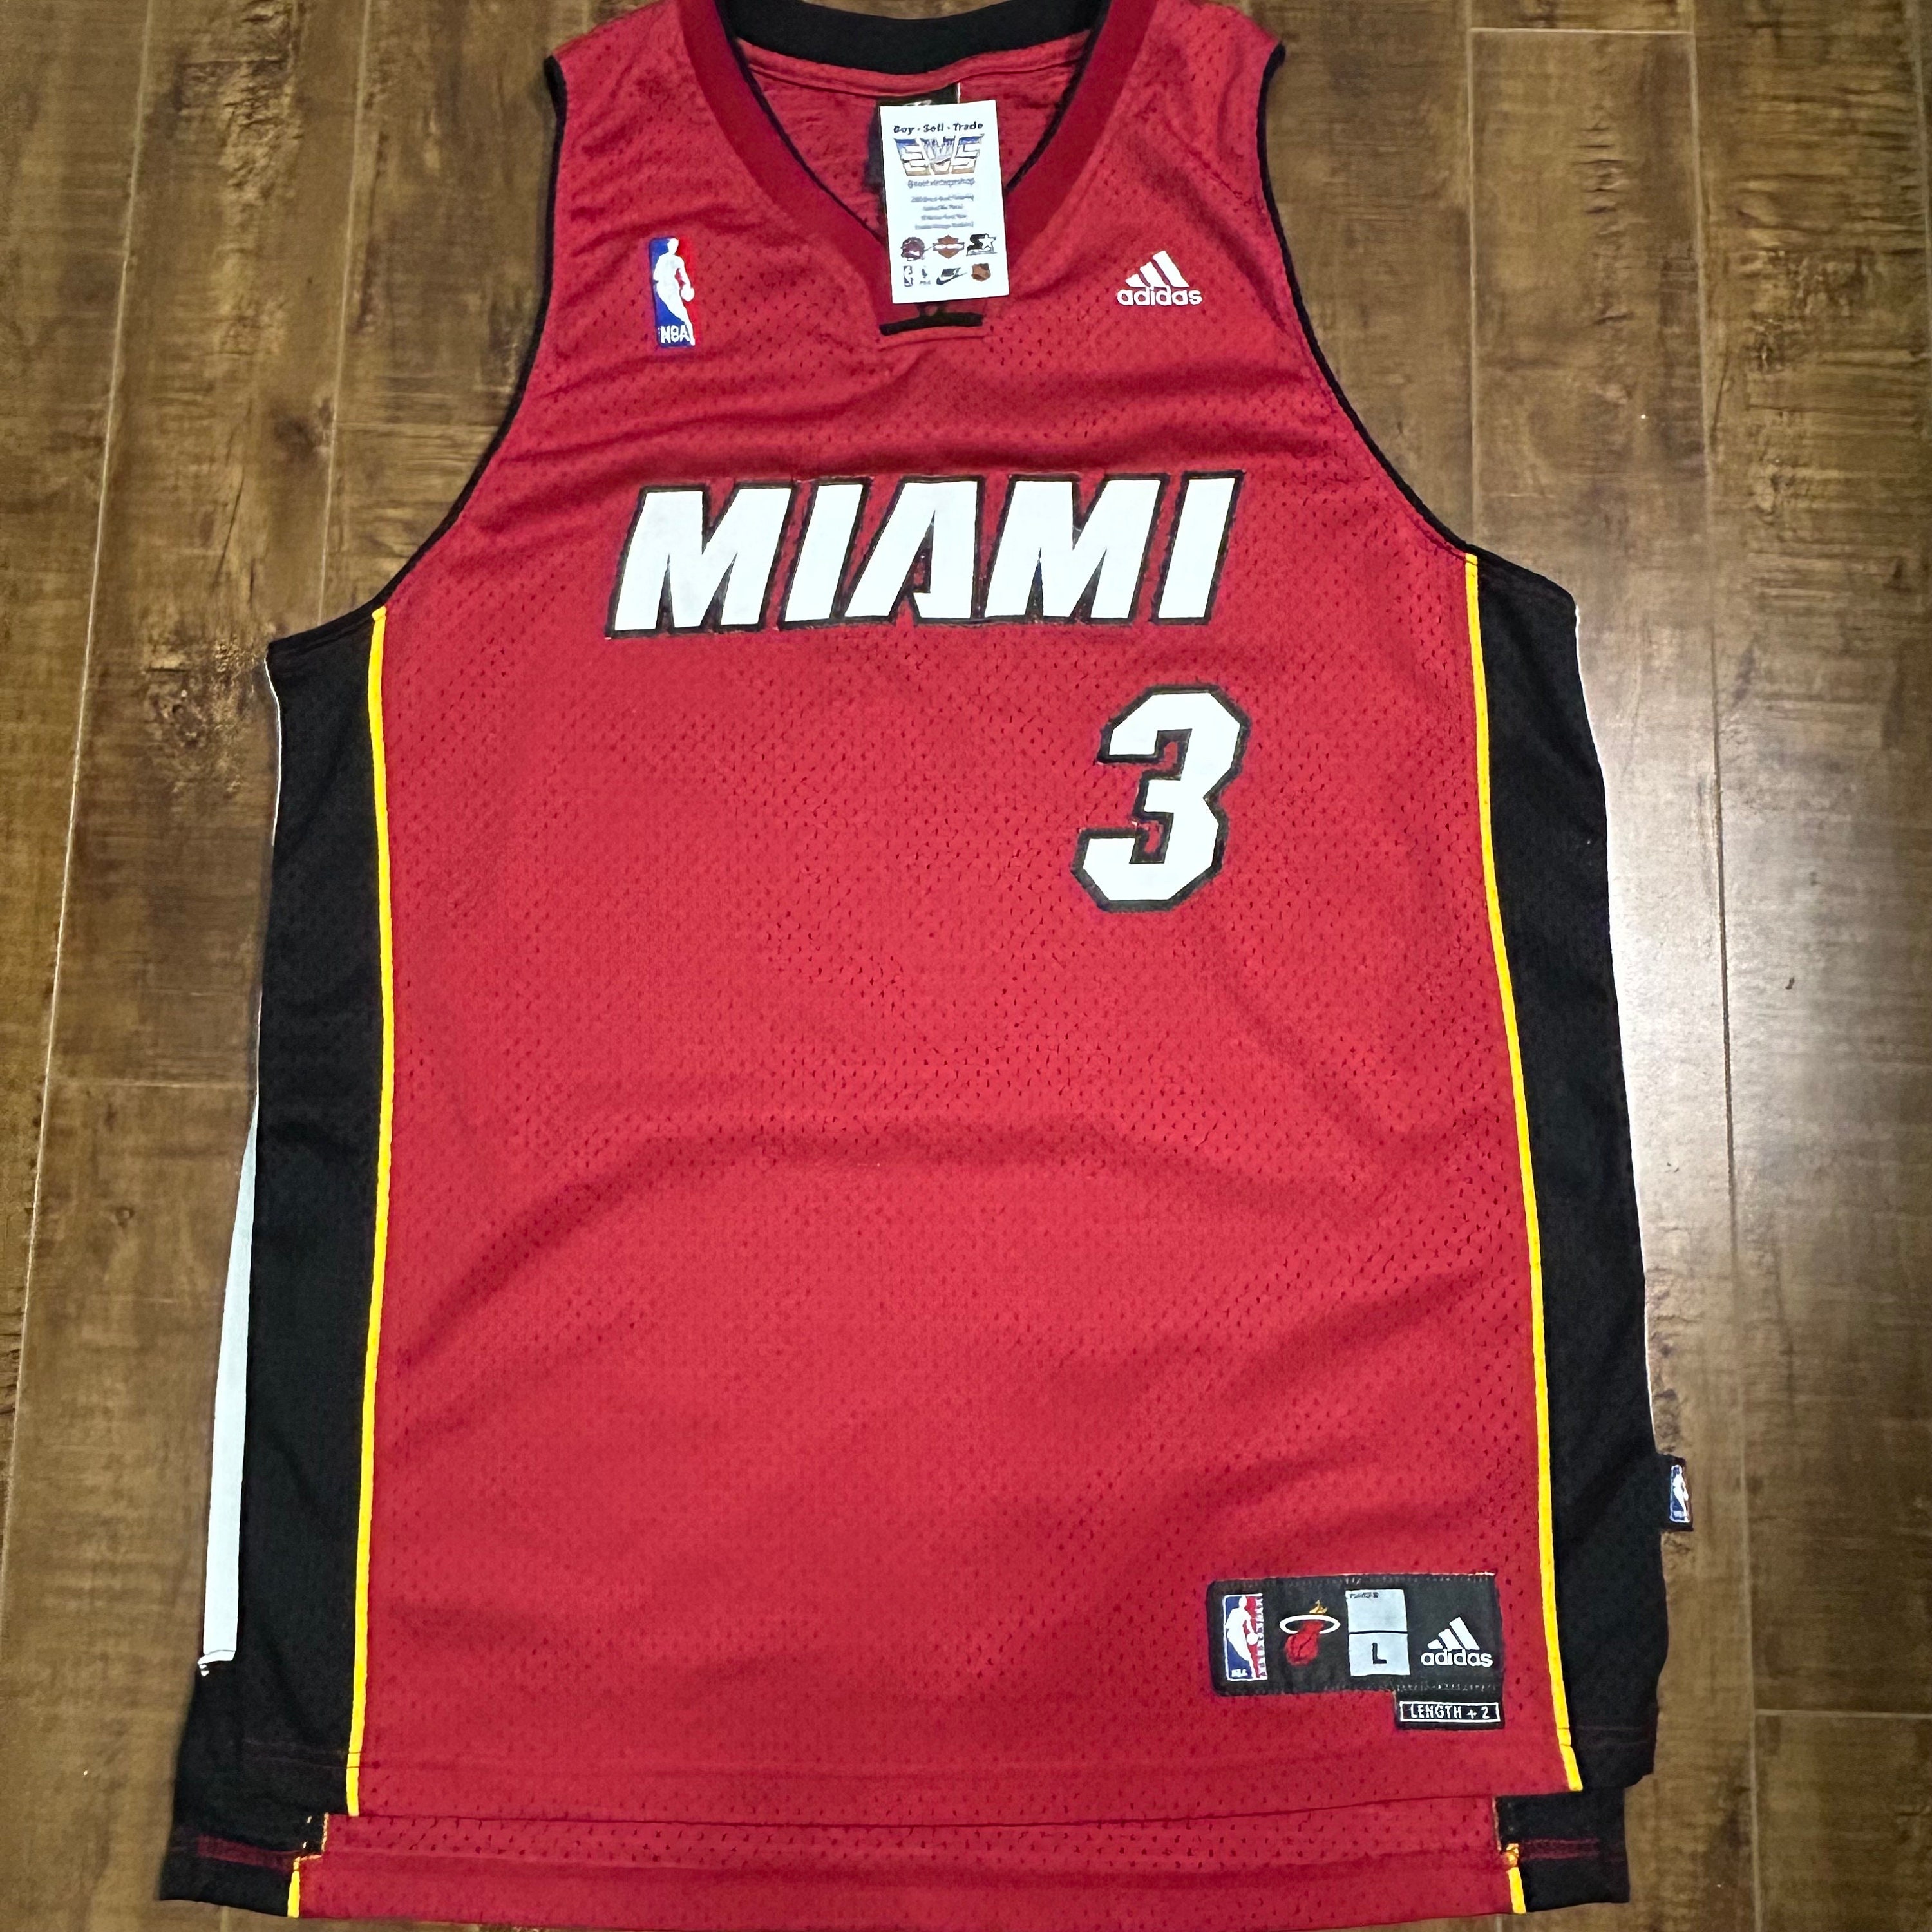 Vintage Nike Miami Heat Jersey Shirt 90s Blank NBA Retro Sports